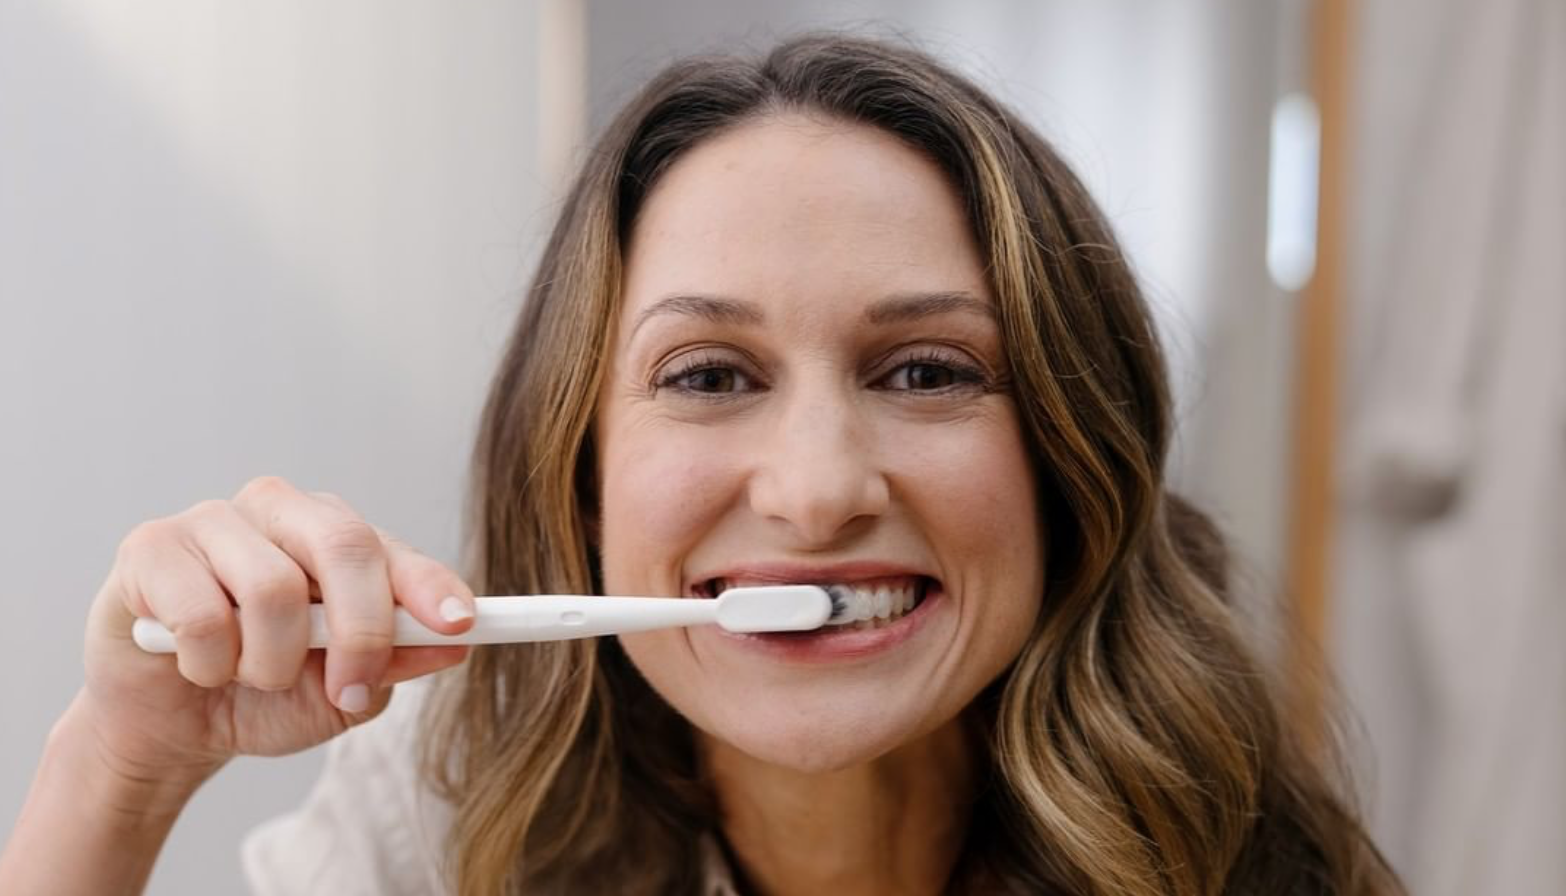 Dsmile launches Australia’s first sustainable environmentally kind dental kit